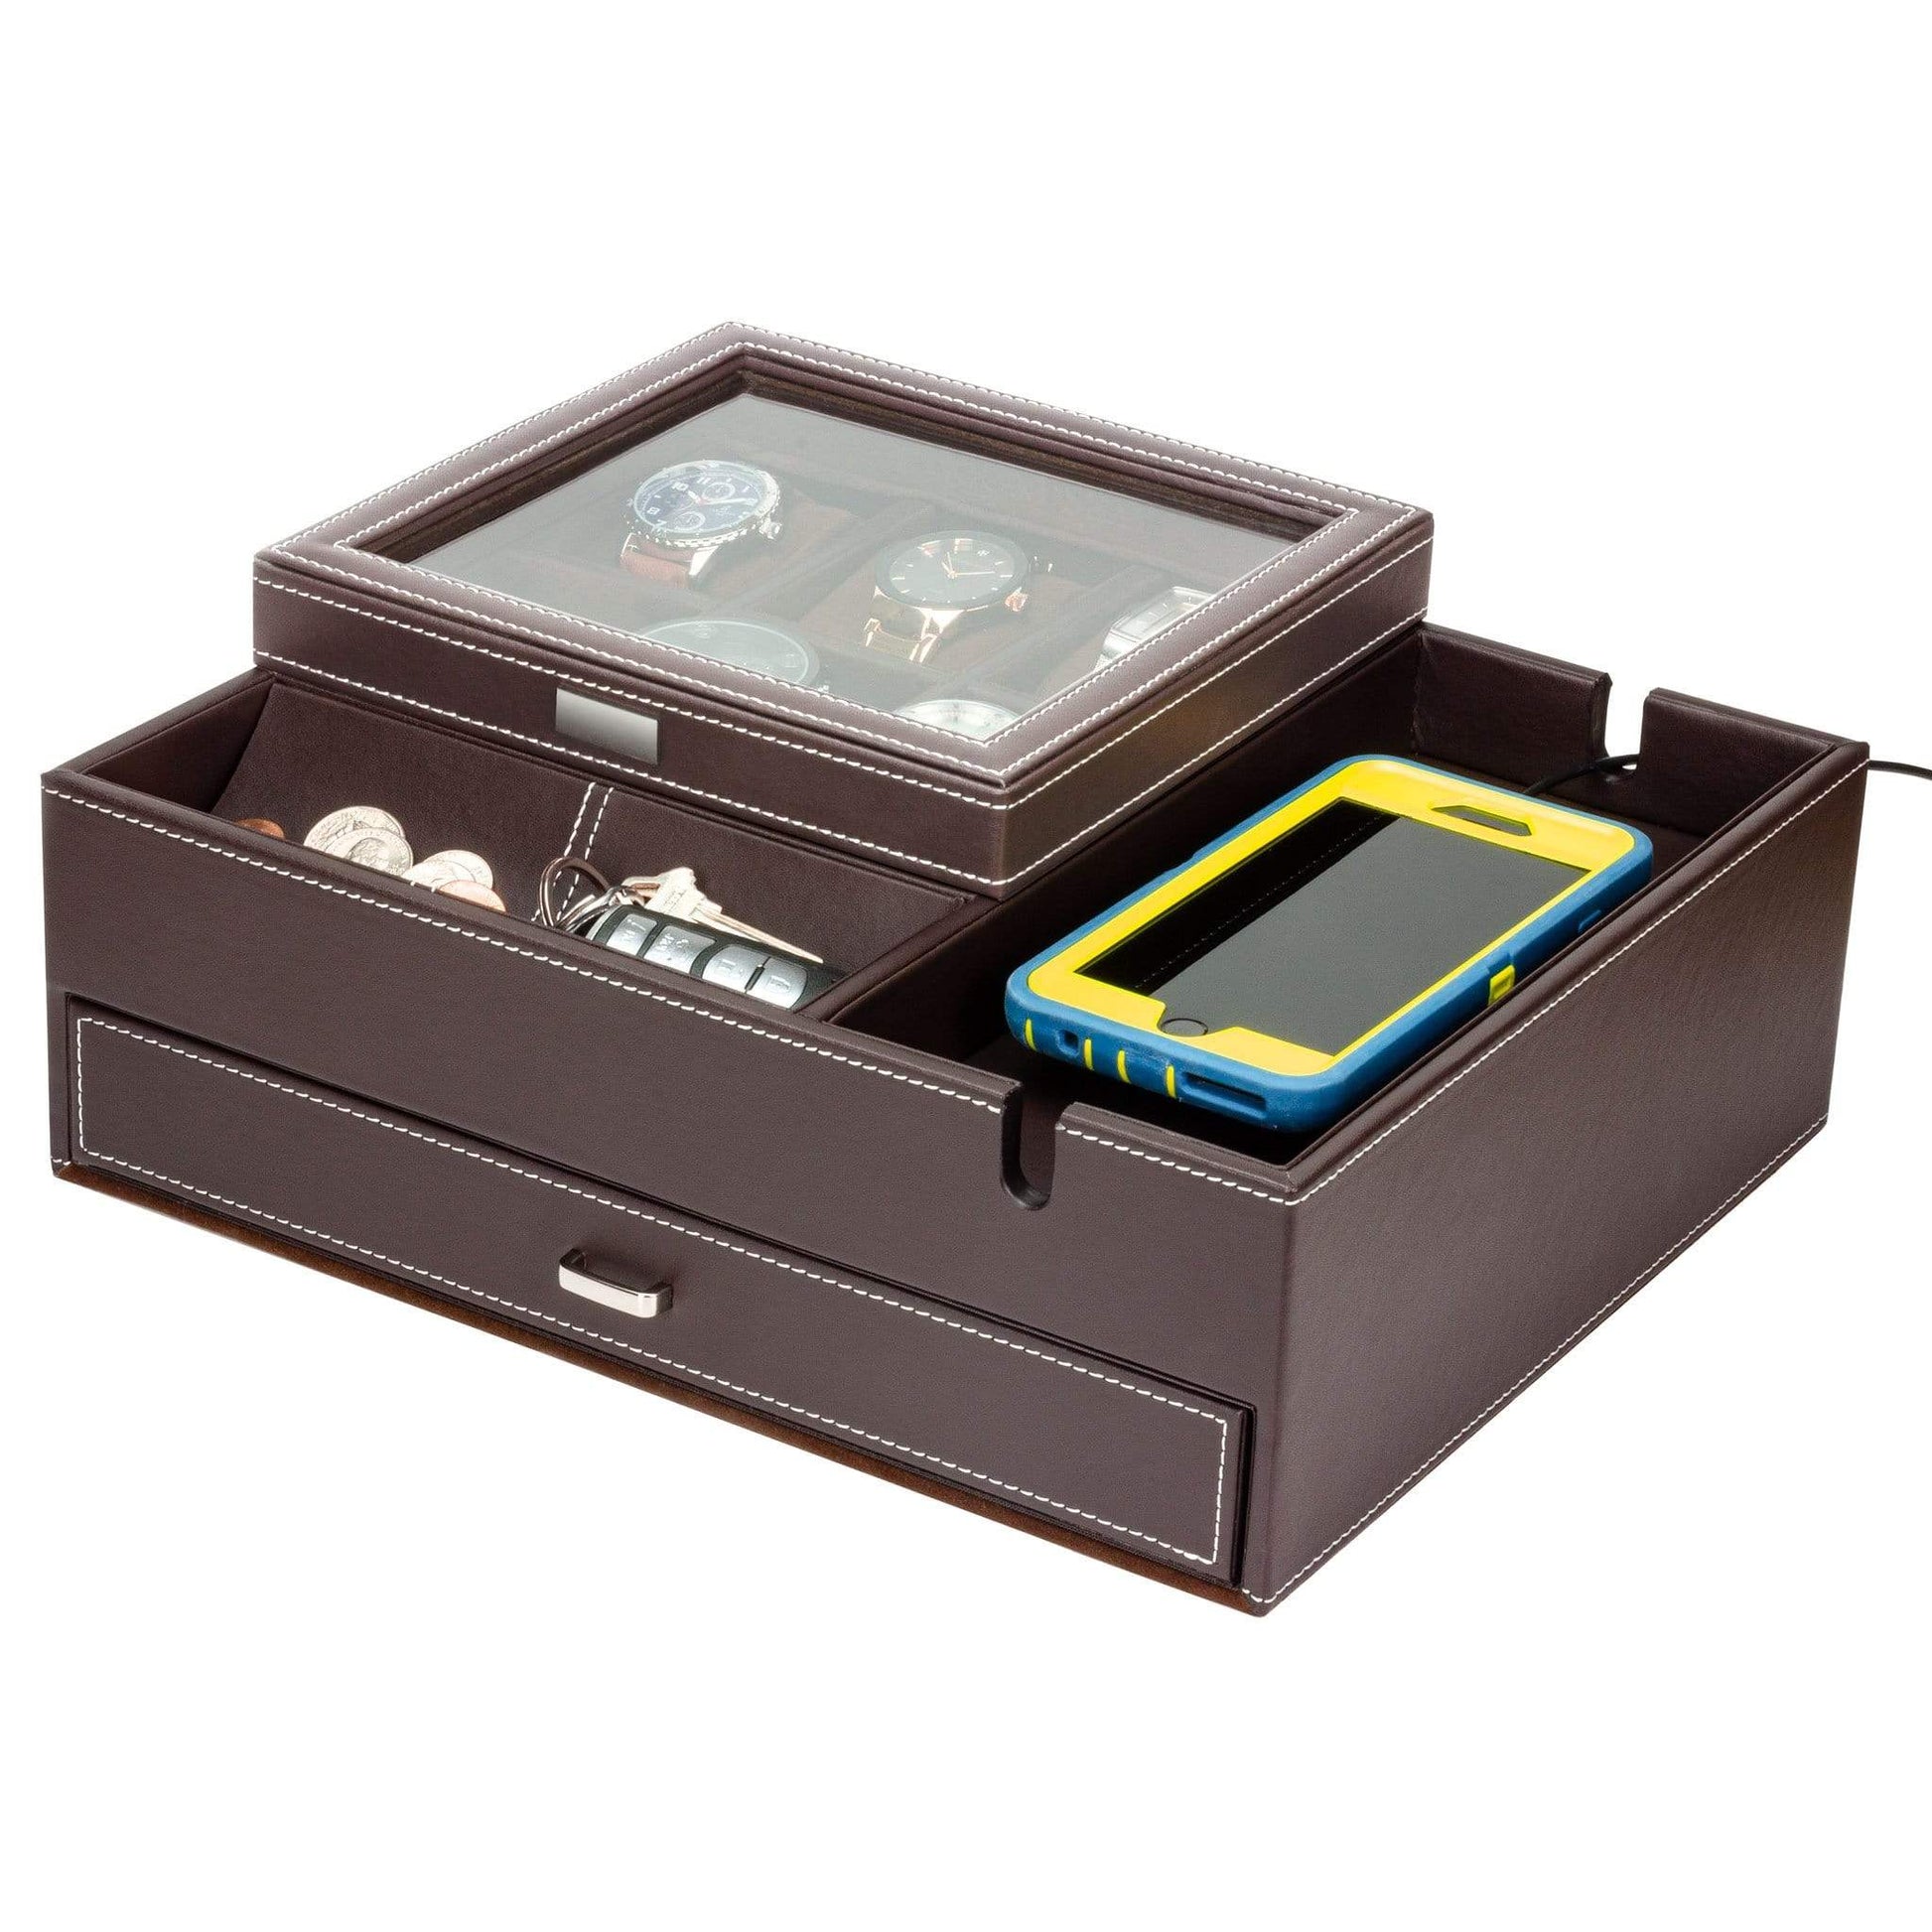 Admiral - Big Dresser Valet Box Organizer with Large Smartphone Charging  Station